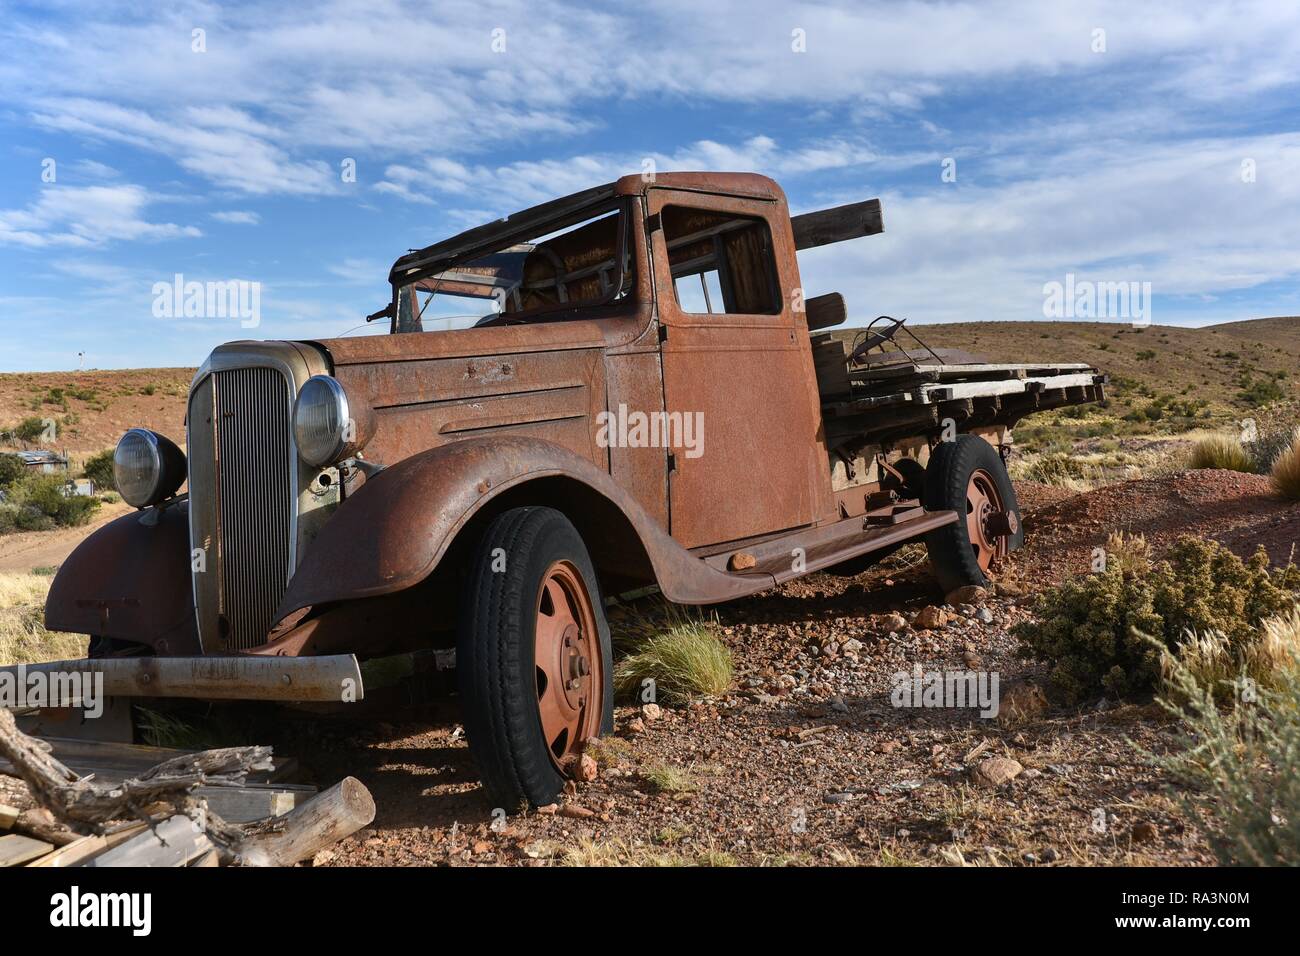 Rusty old car, classic car in barren landscape, near Comodoro Rivadavia, Patagonia, Argentina Stock Photo